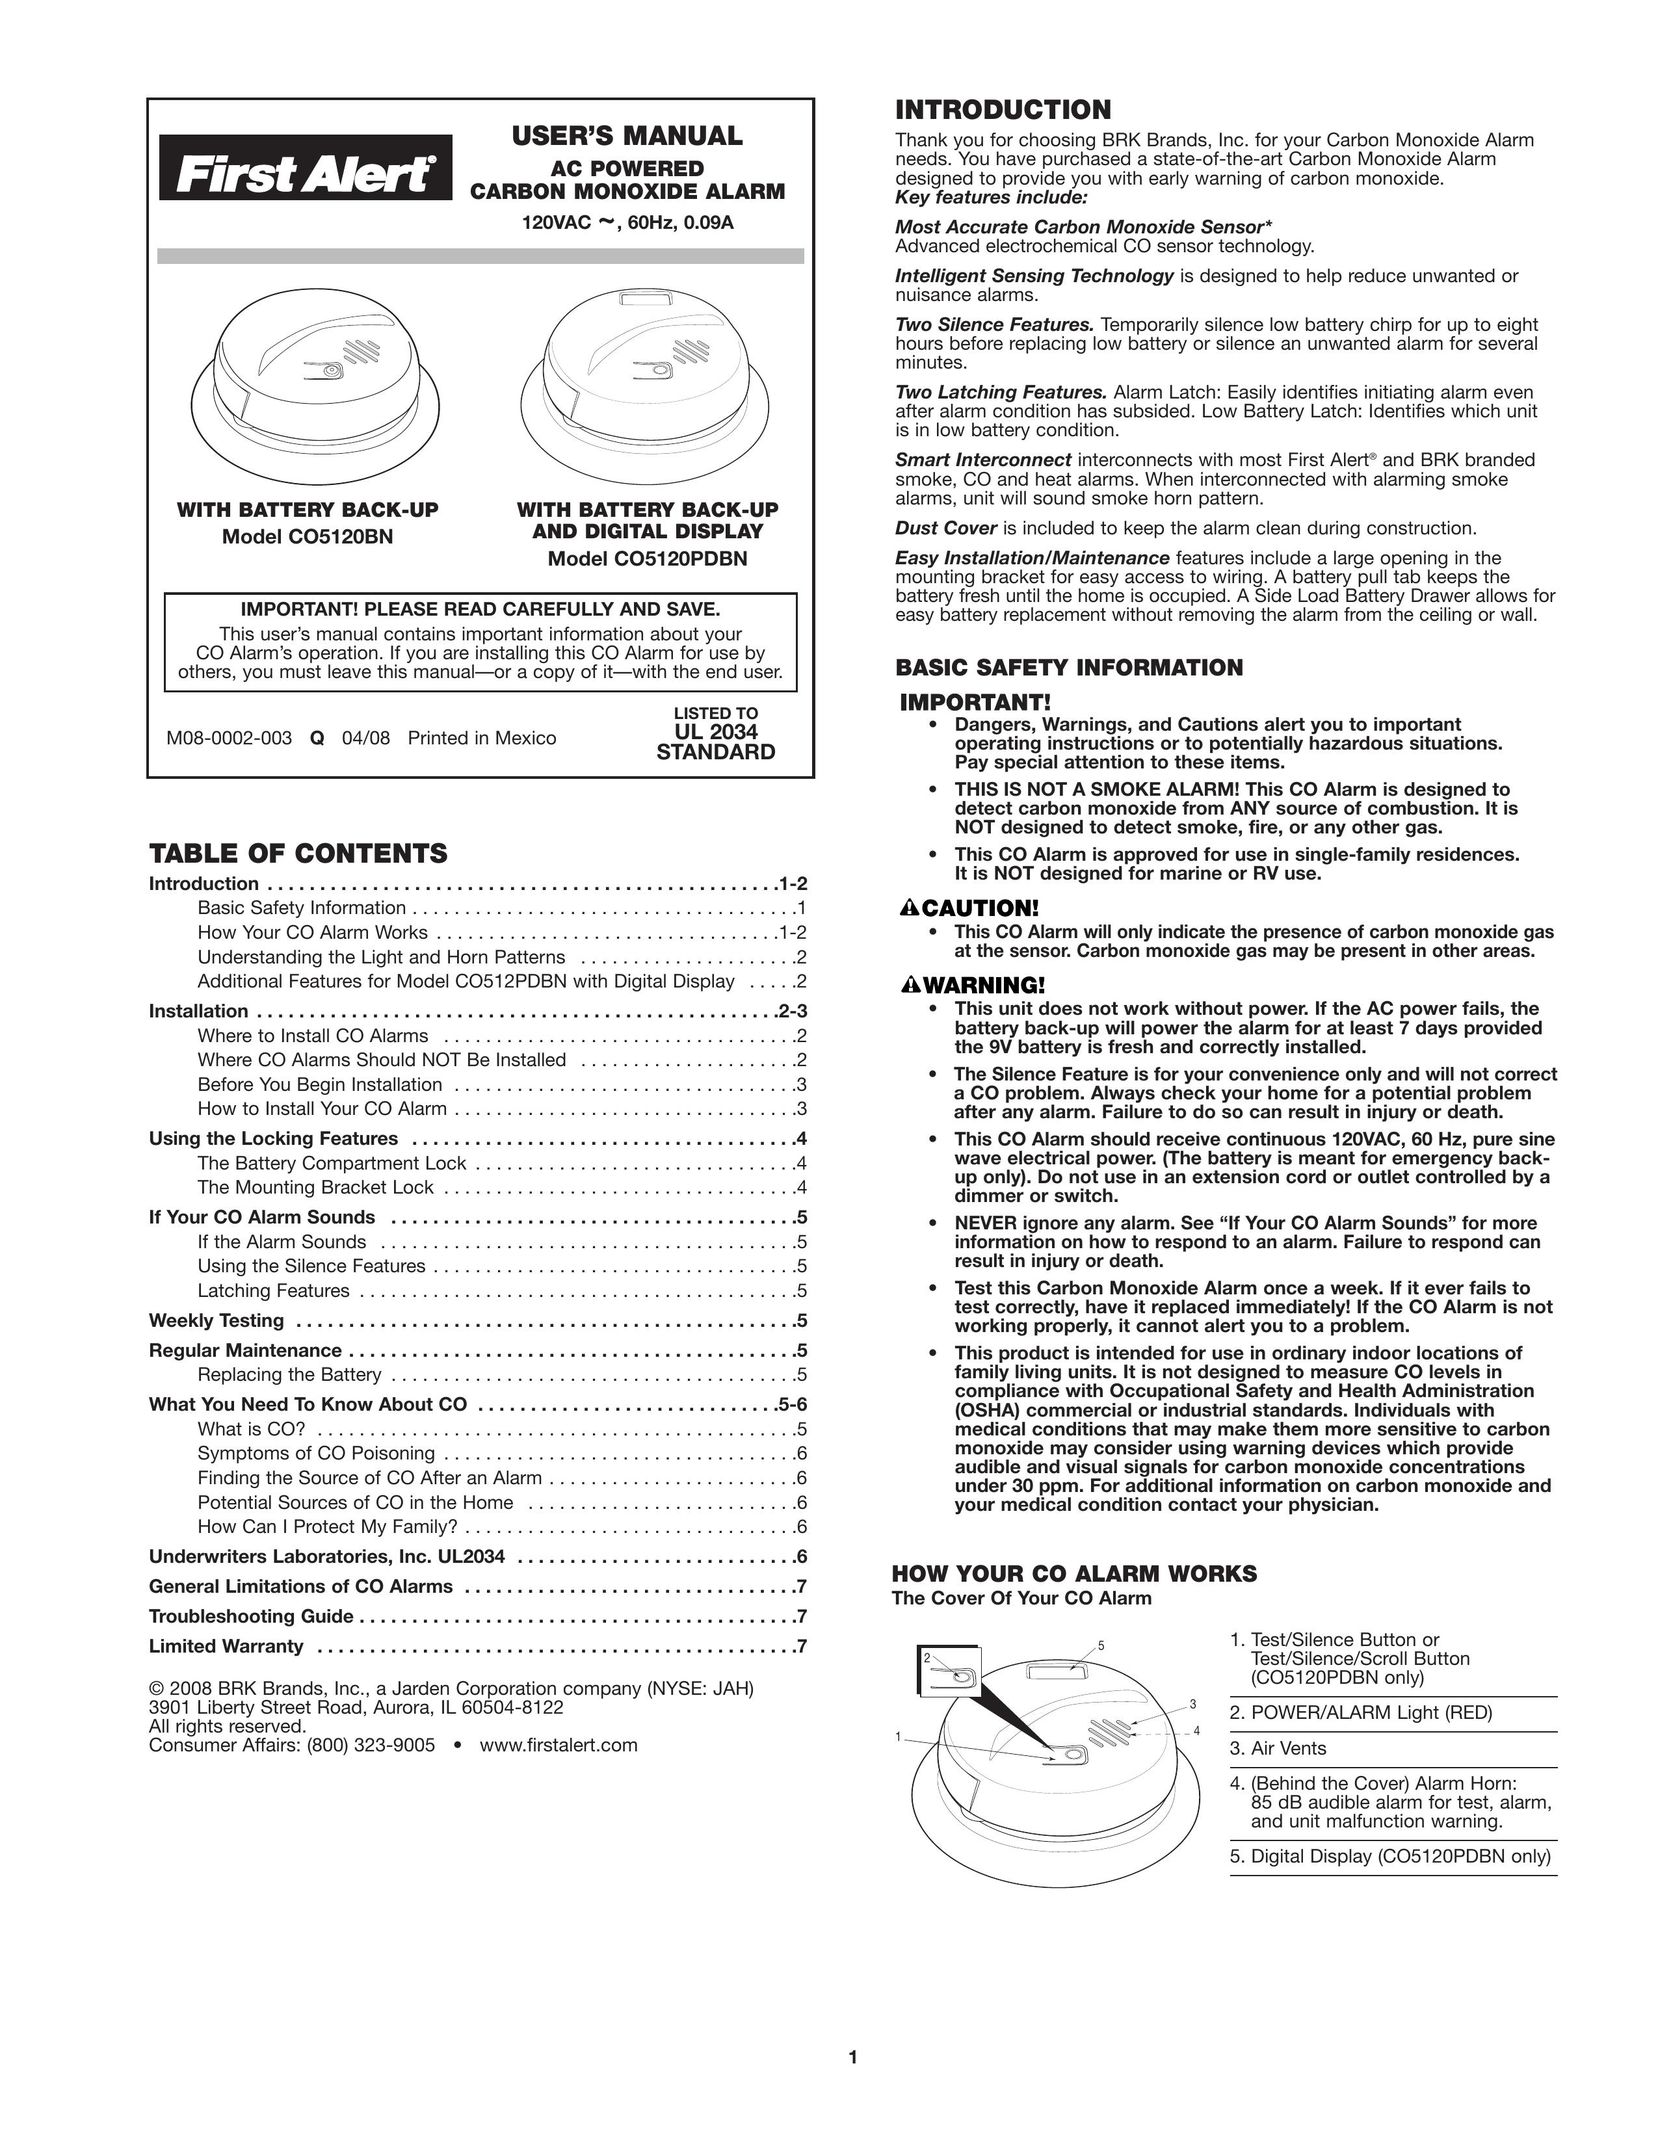 BRK electronic CO5120PDBN Carbon Monoxide Alarm User Manual